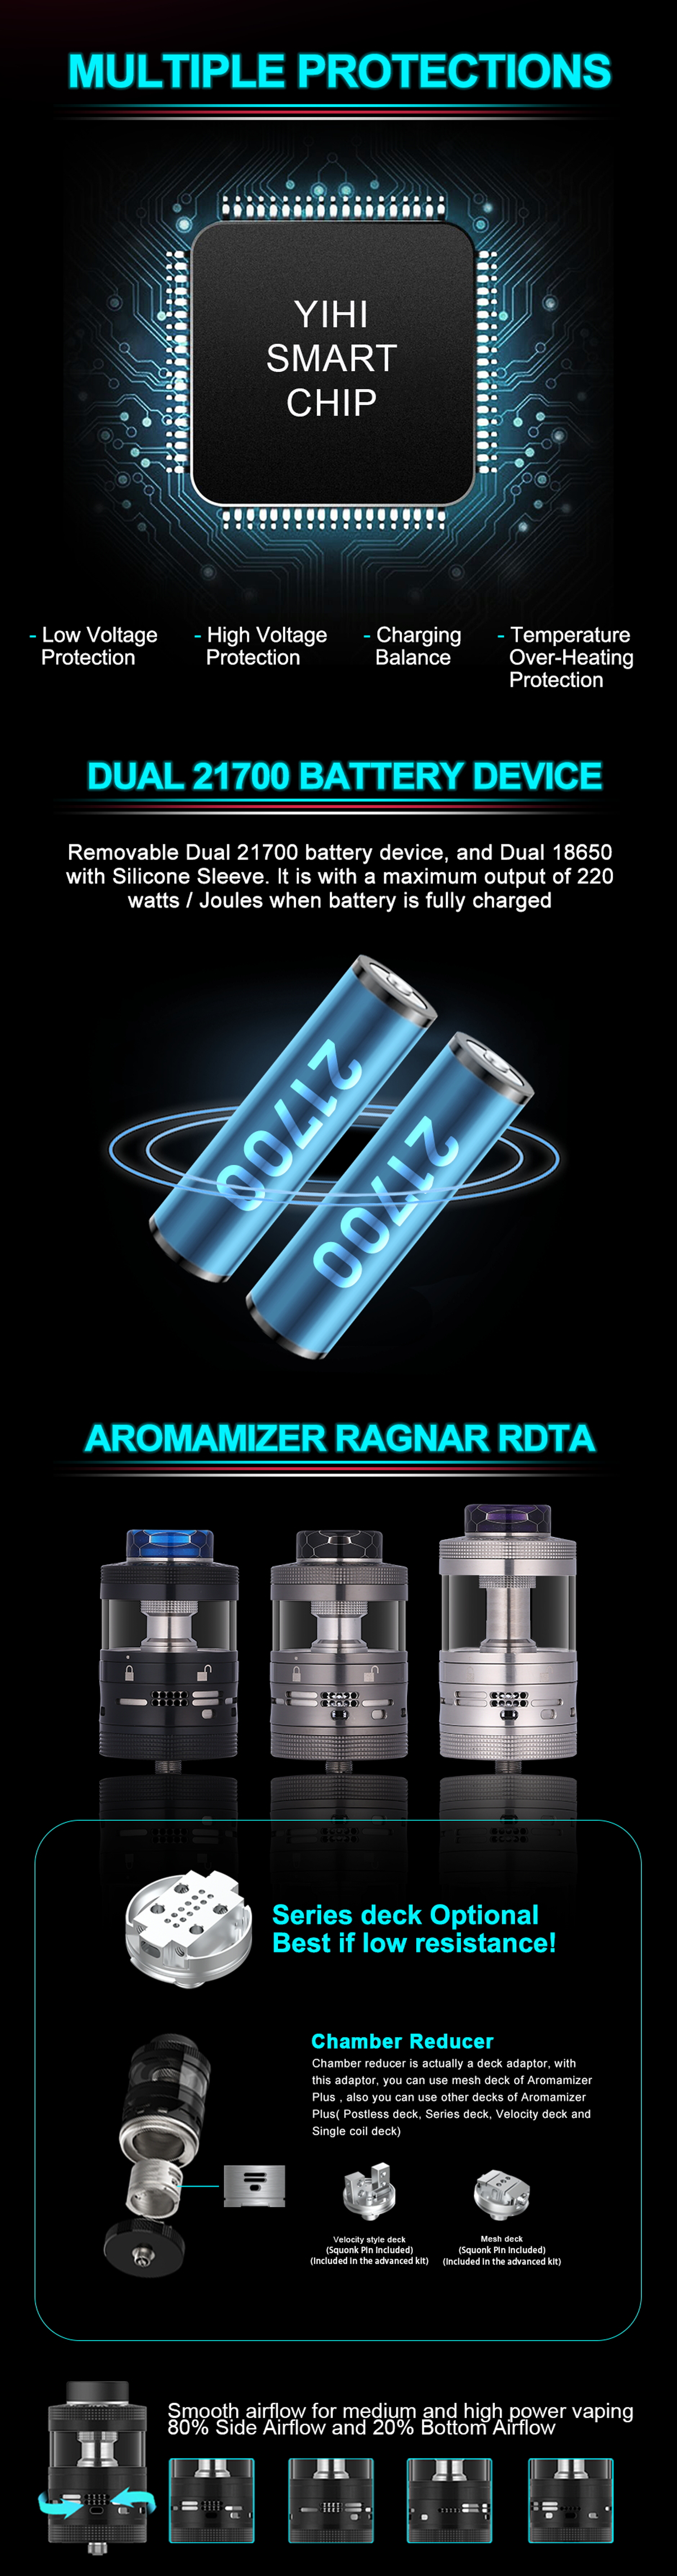 Steam Crave Hadron 220 Combo Kit With Ragnar RDTA - ECIGONE